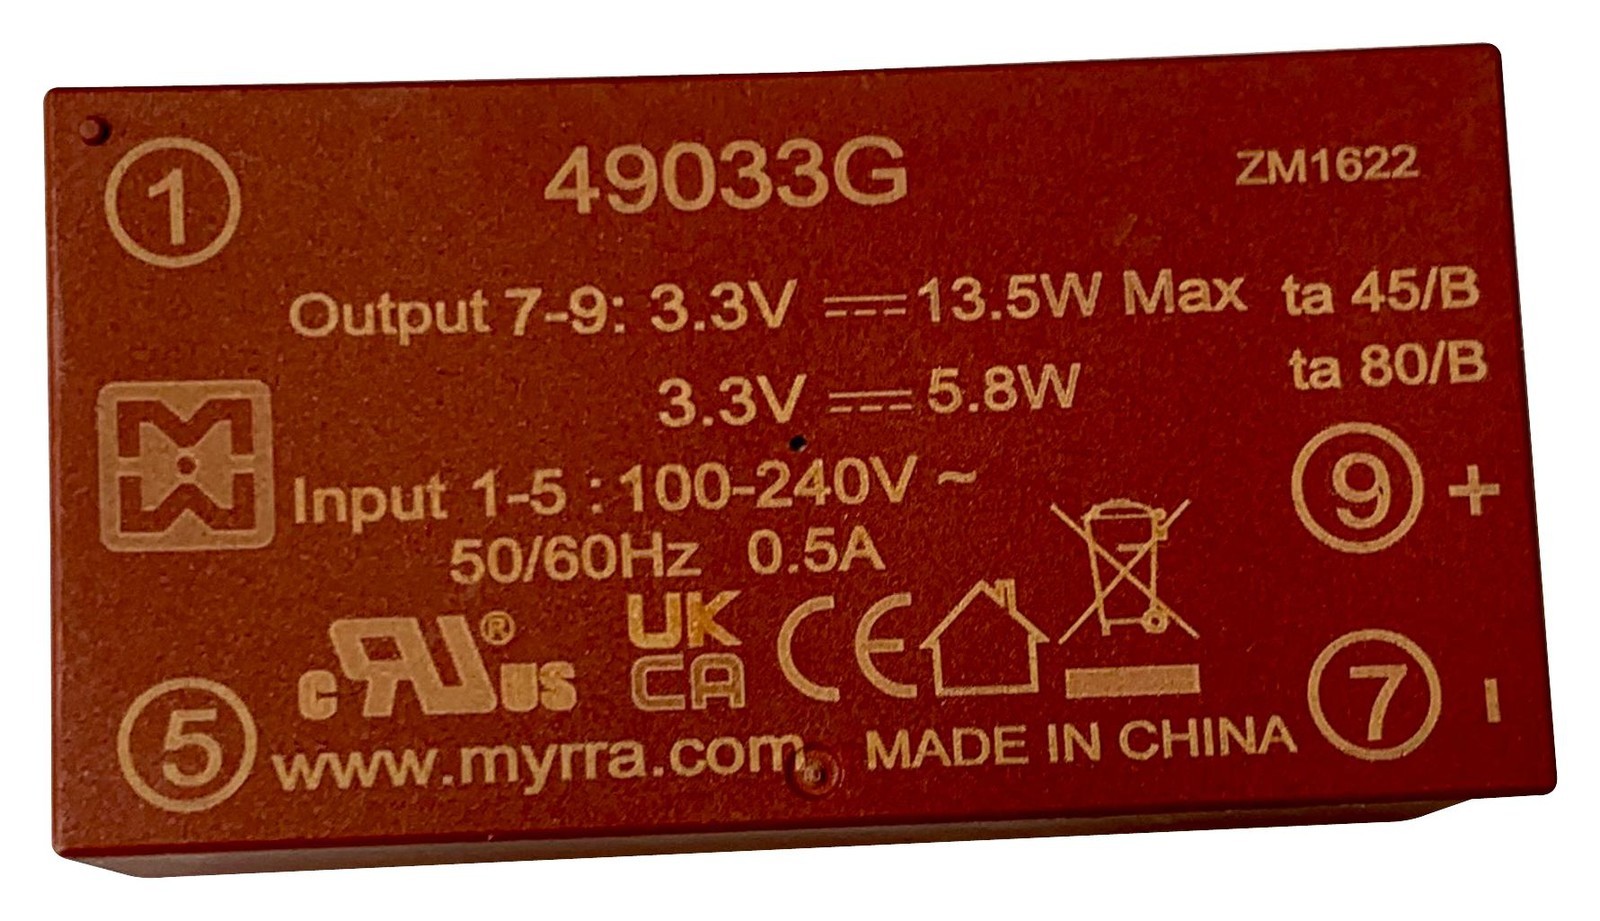 Myrra 49033G Power Supply, Ac-Dc, 3.3V, 4.4A